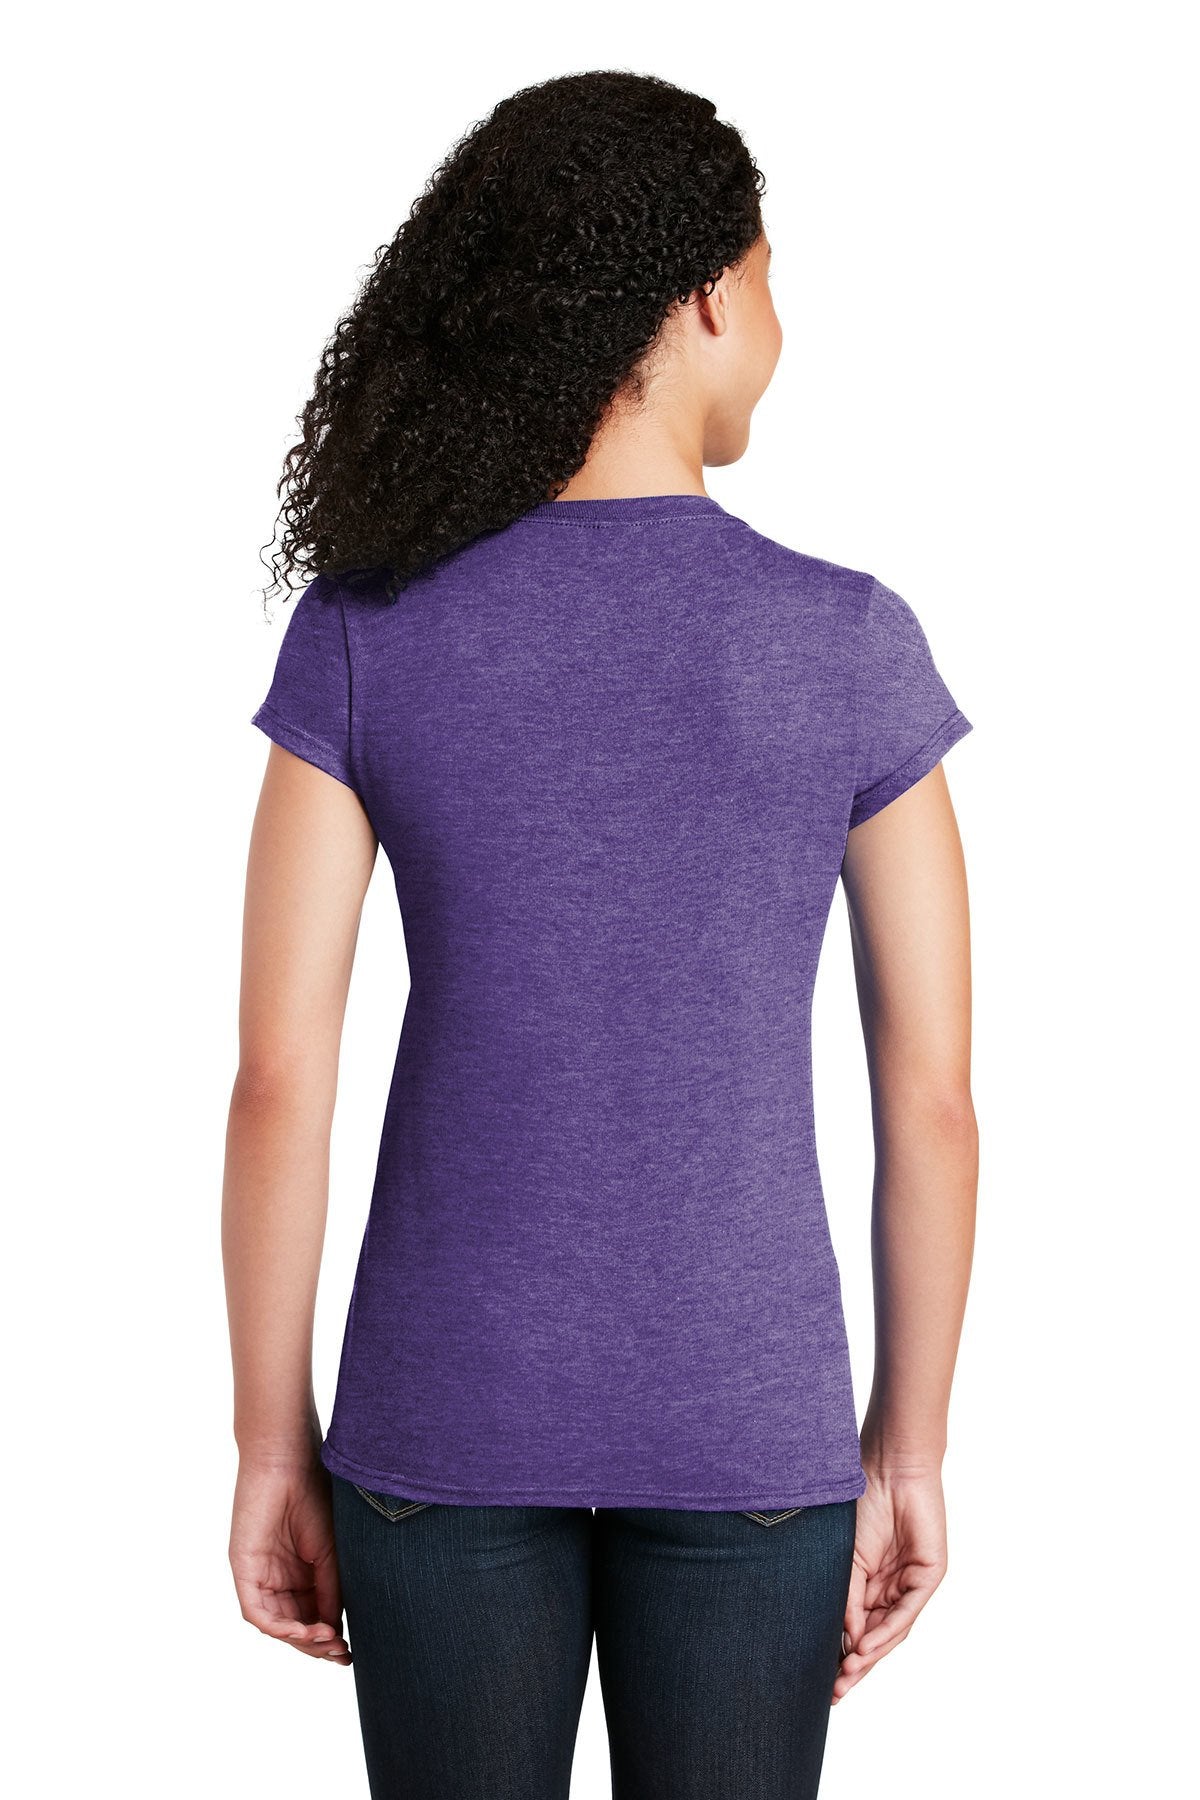 Branded Gildan Softstyle Ladies T Shirt 64000l Heather Purple Lead Apparel 1573